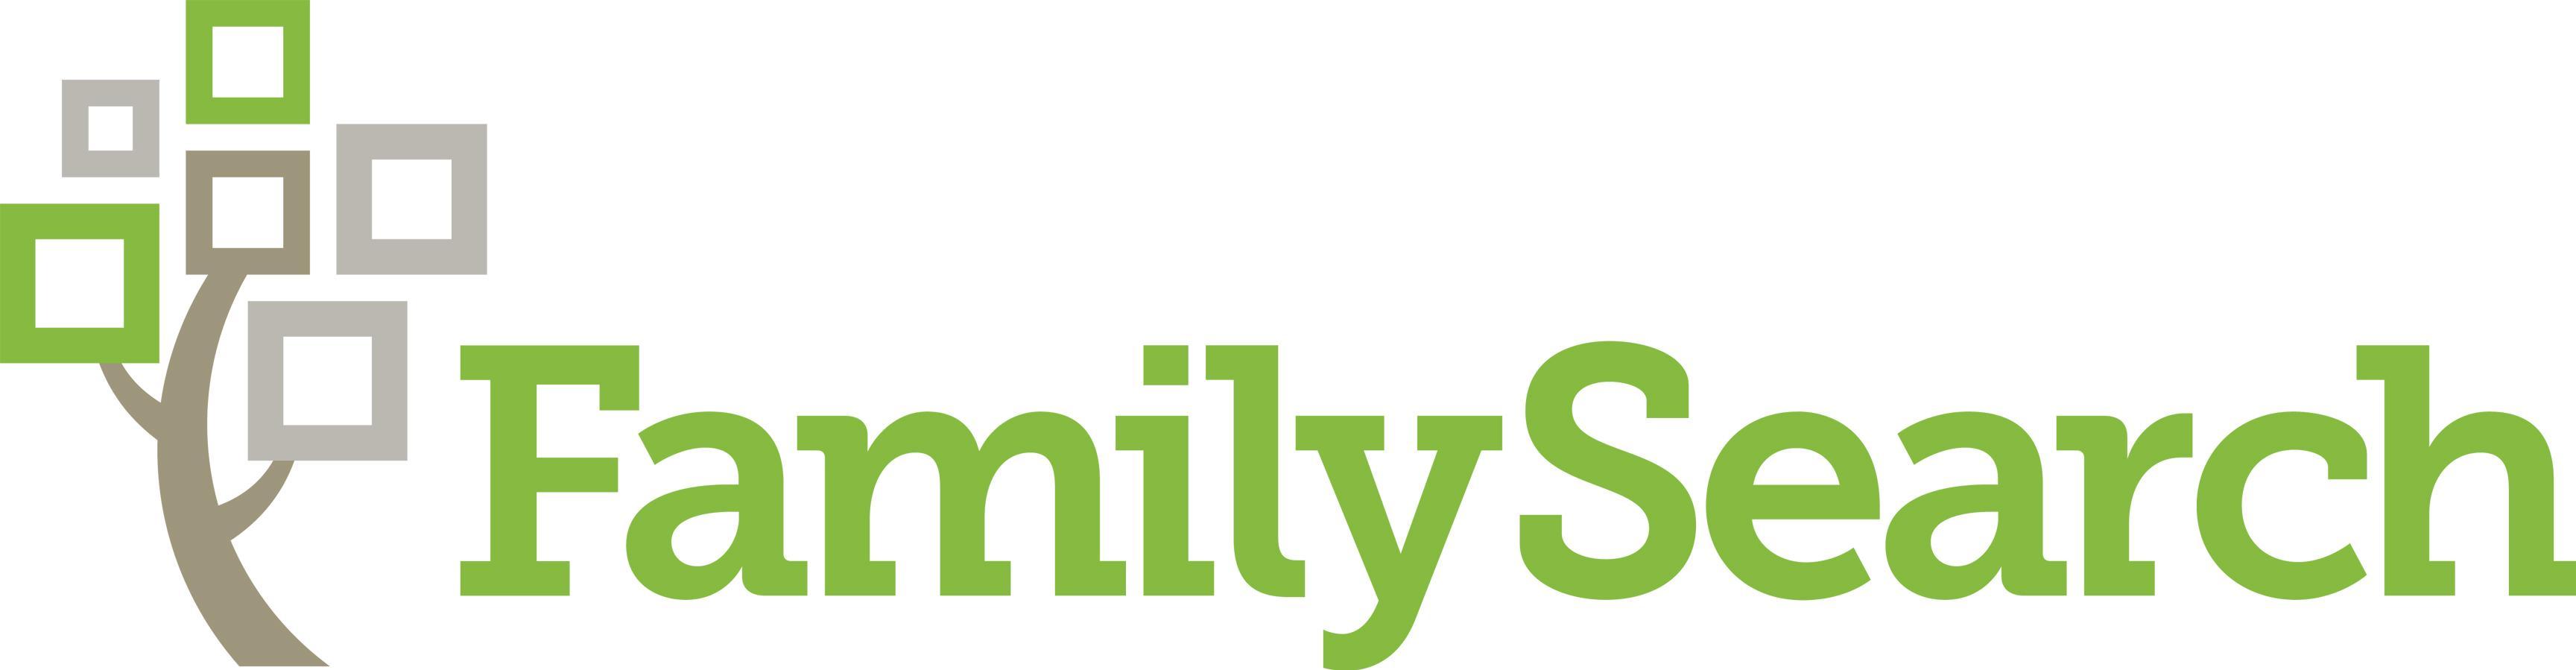 family search mosaic logo